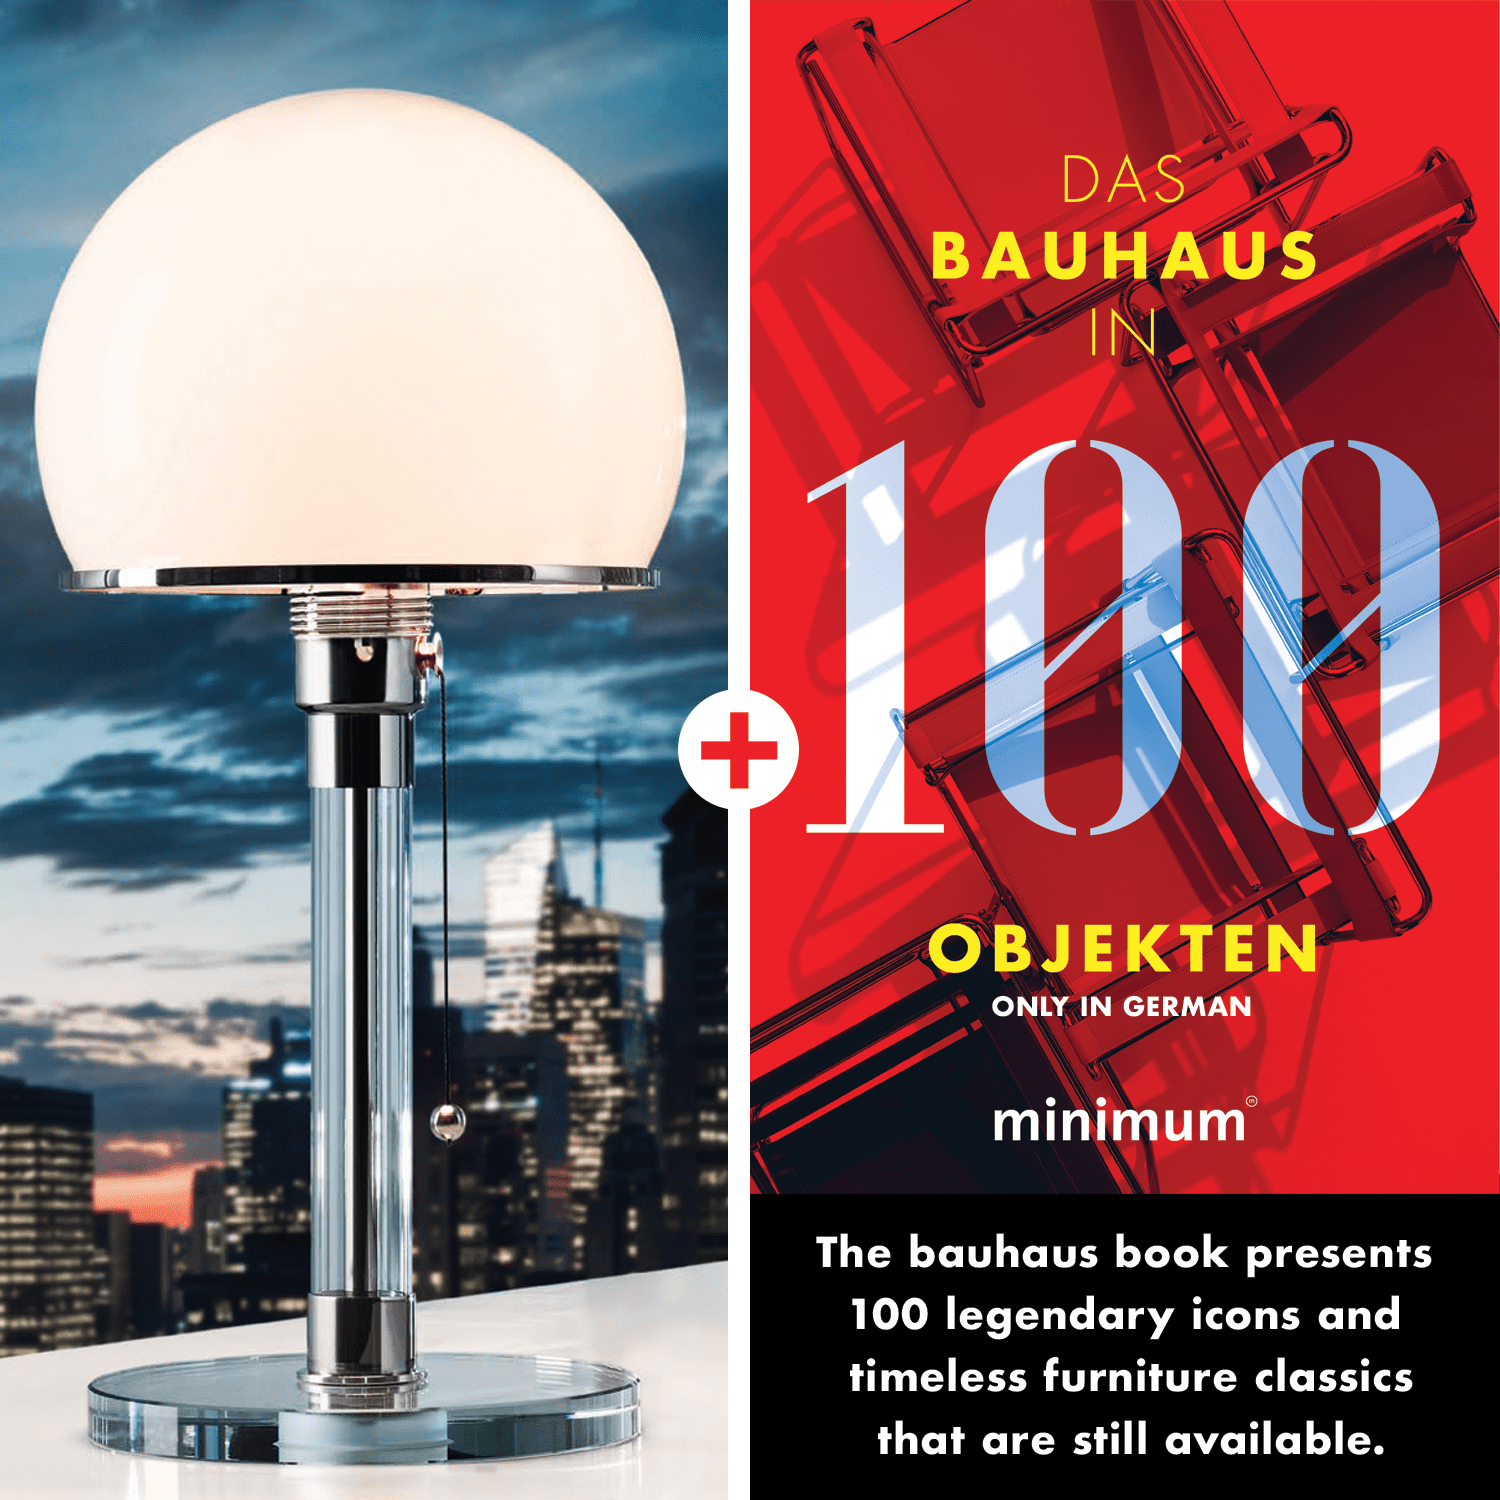 Wagenfeld Lamp WG 24 + Bauhaus in 100 Objects的图片
